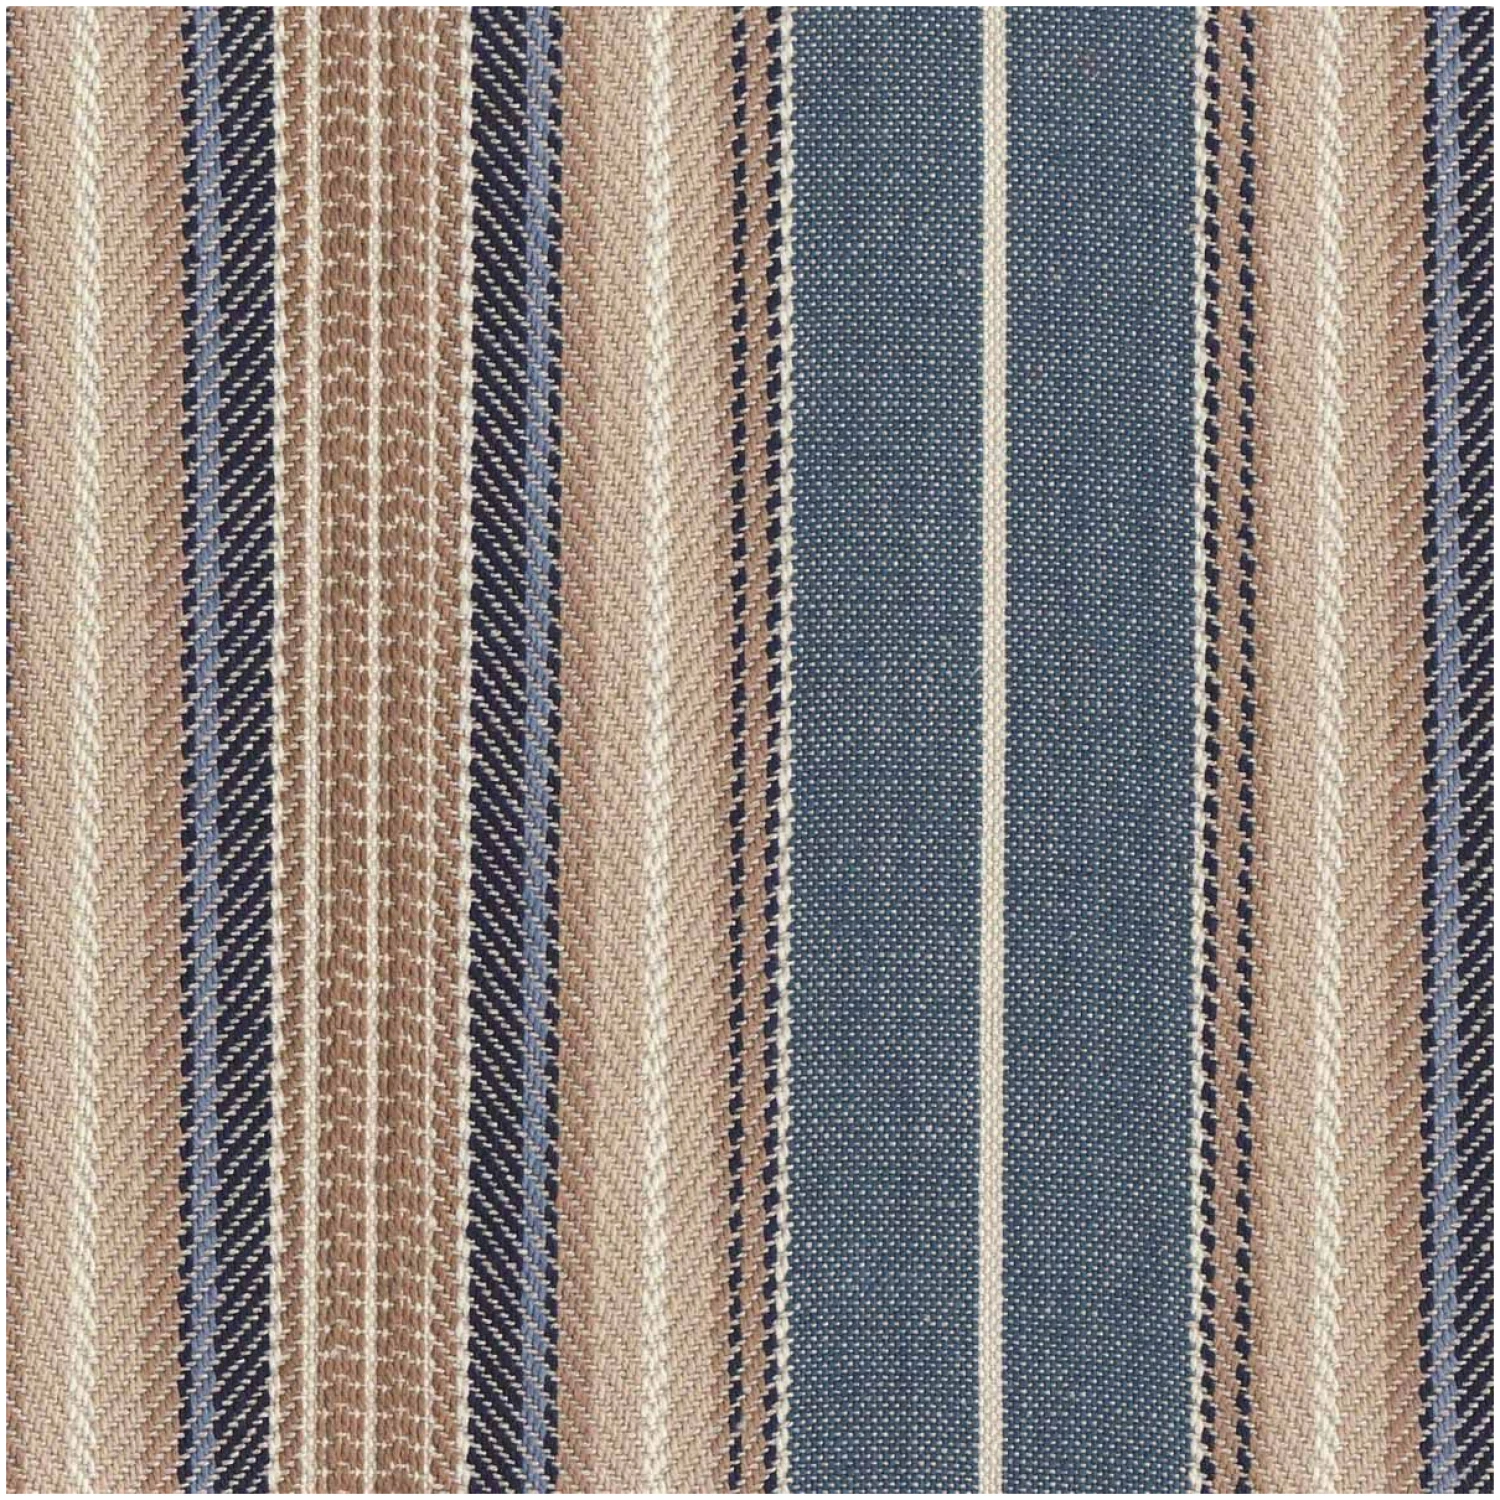 Hh-Montan/Blue - Multi Purpose Fabric Suitable For Drapery